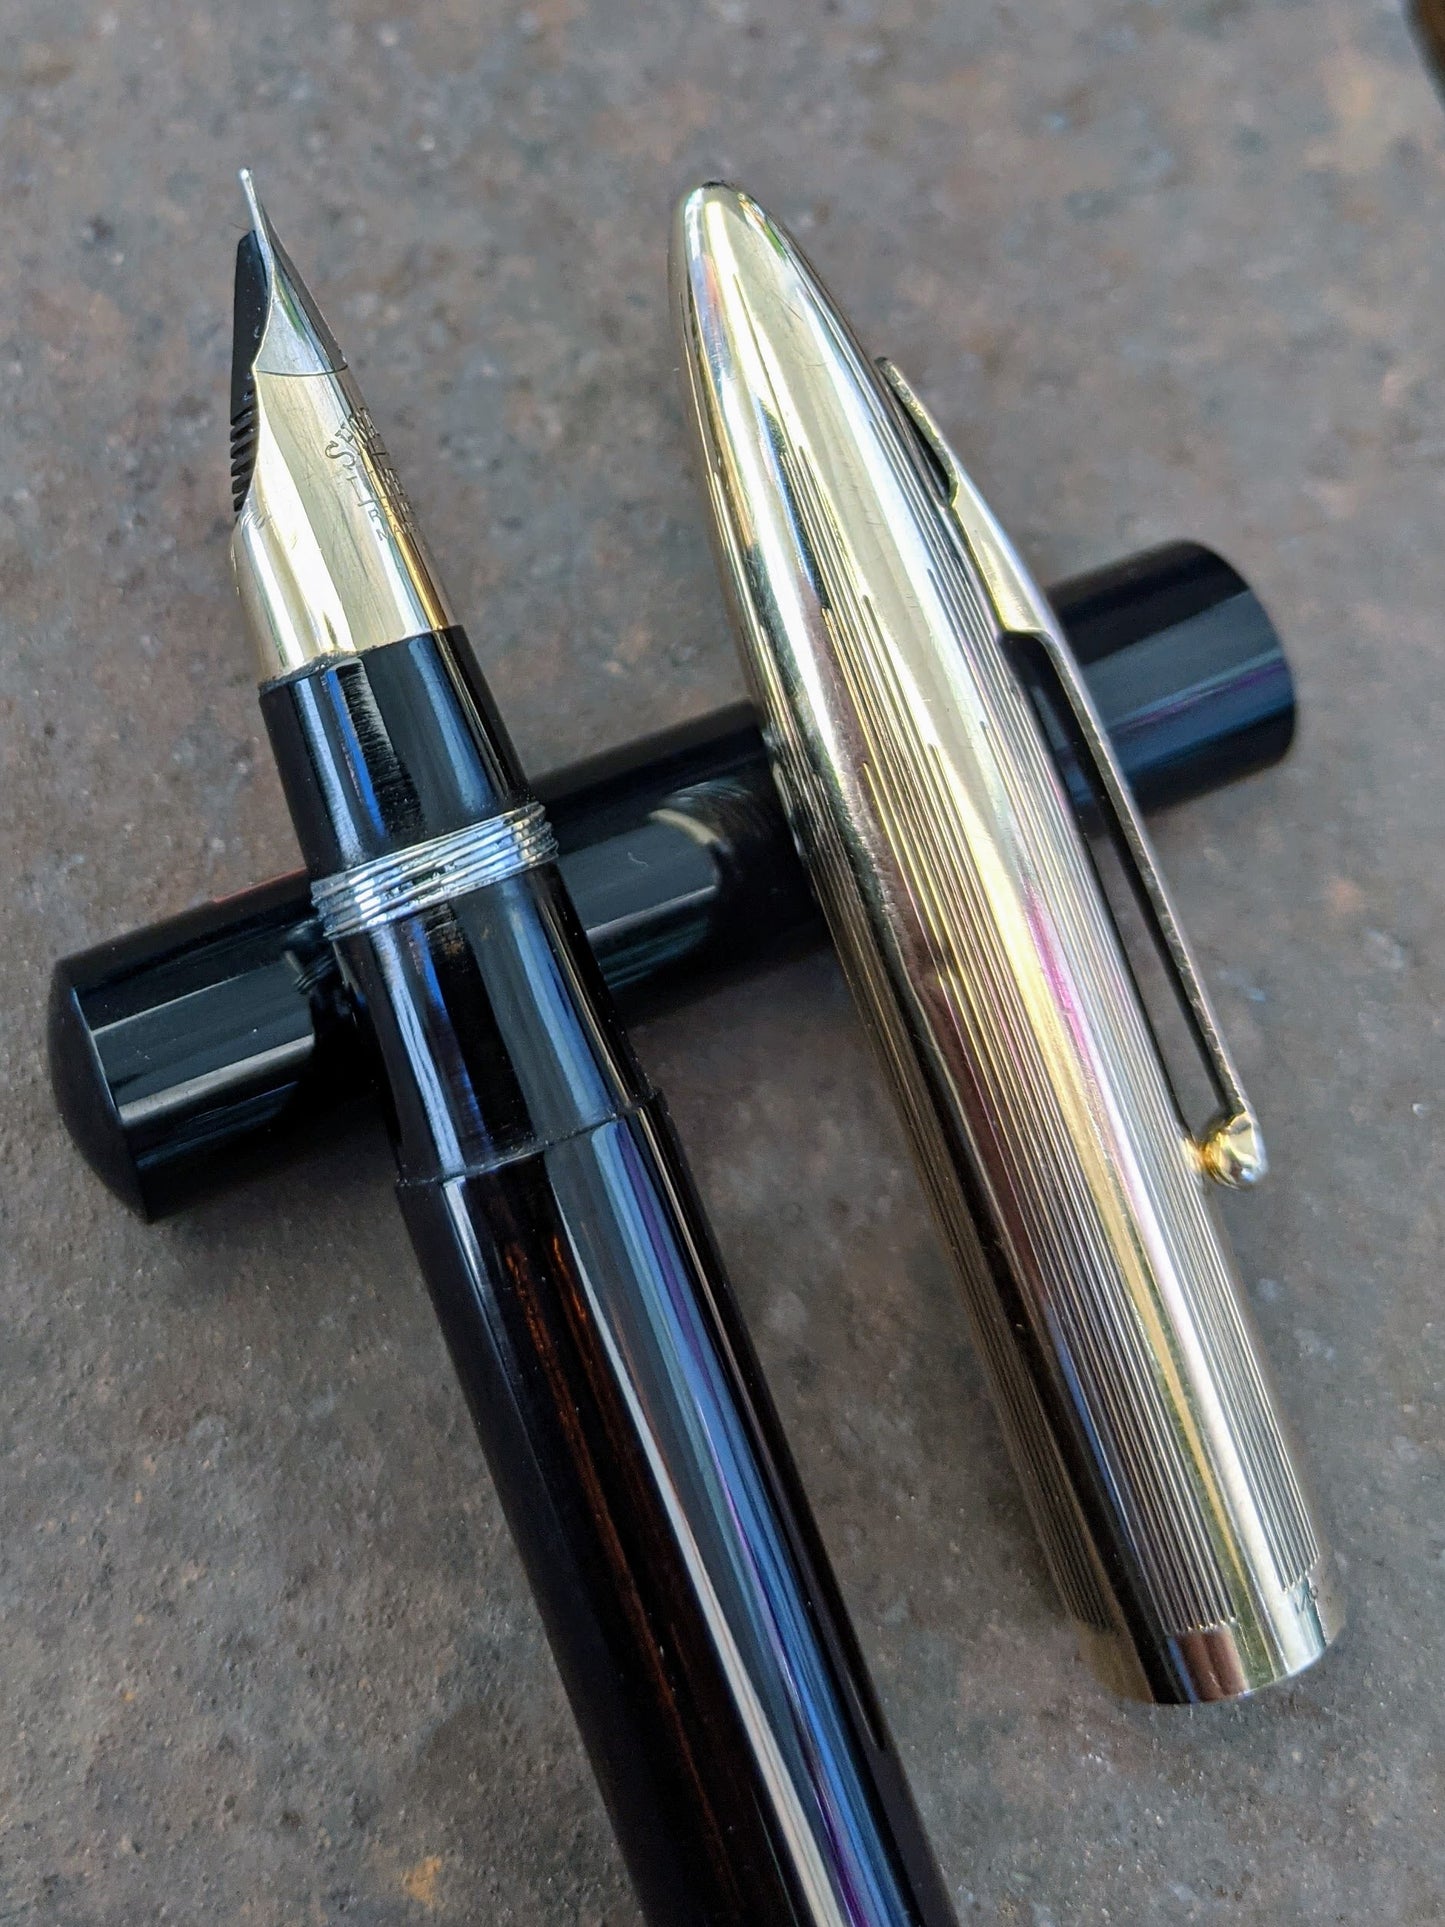 ~1942 Black Sheaffer Triumph "Crest" fountain pen